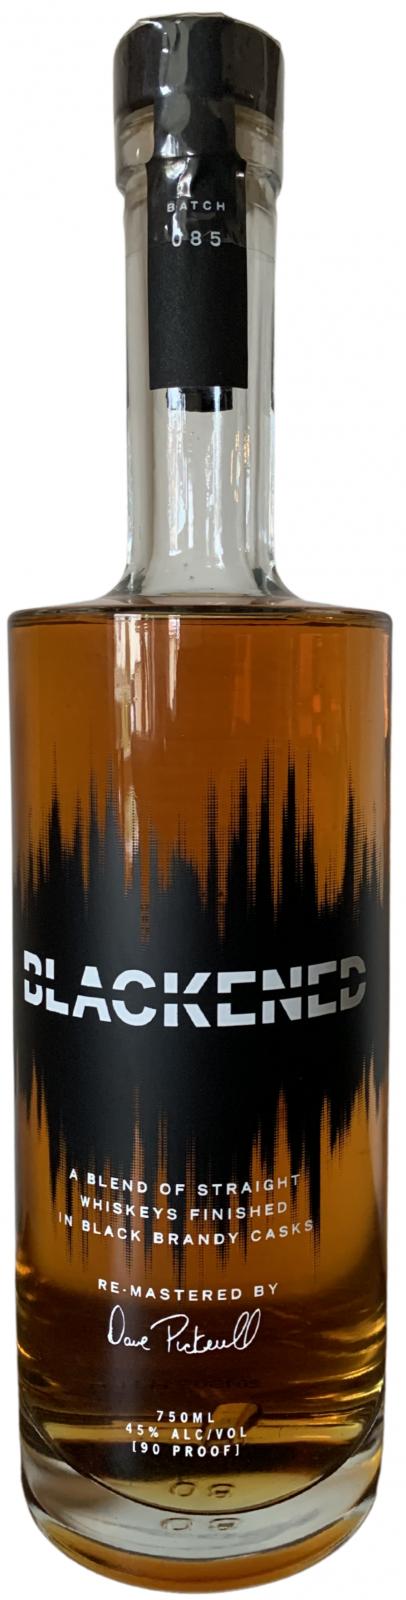 Blackened Batch 085 45% 750ml